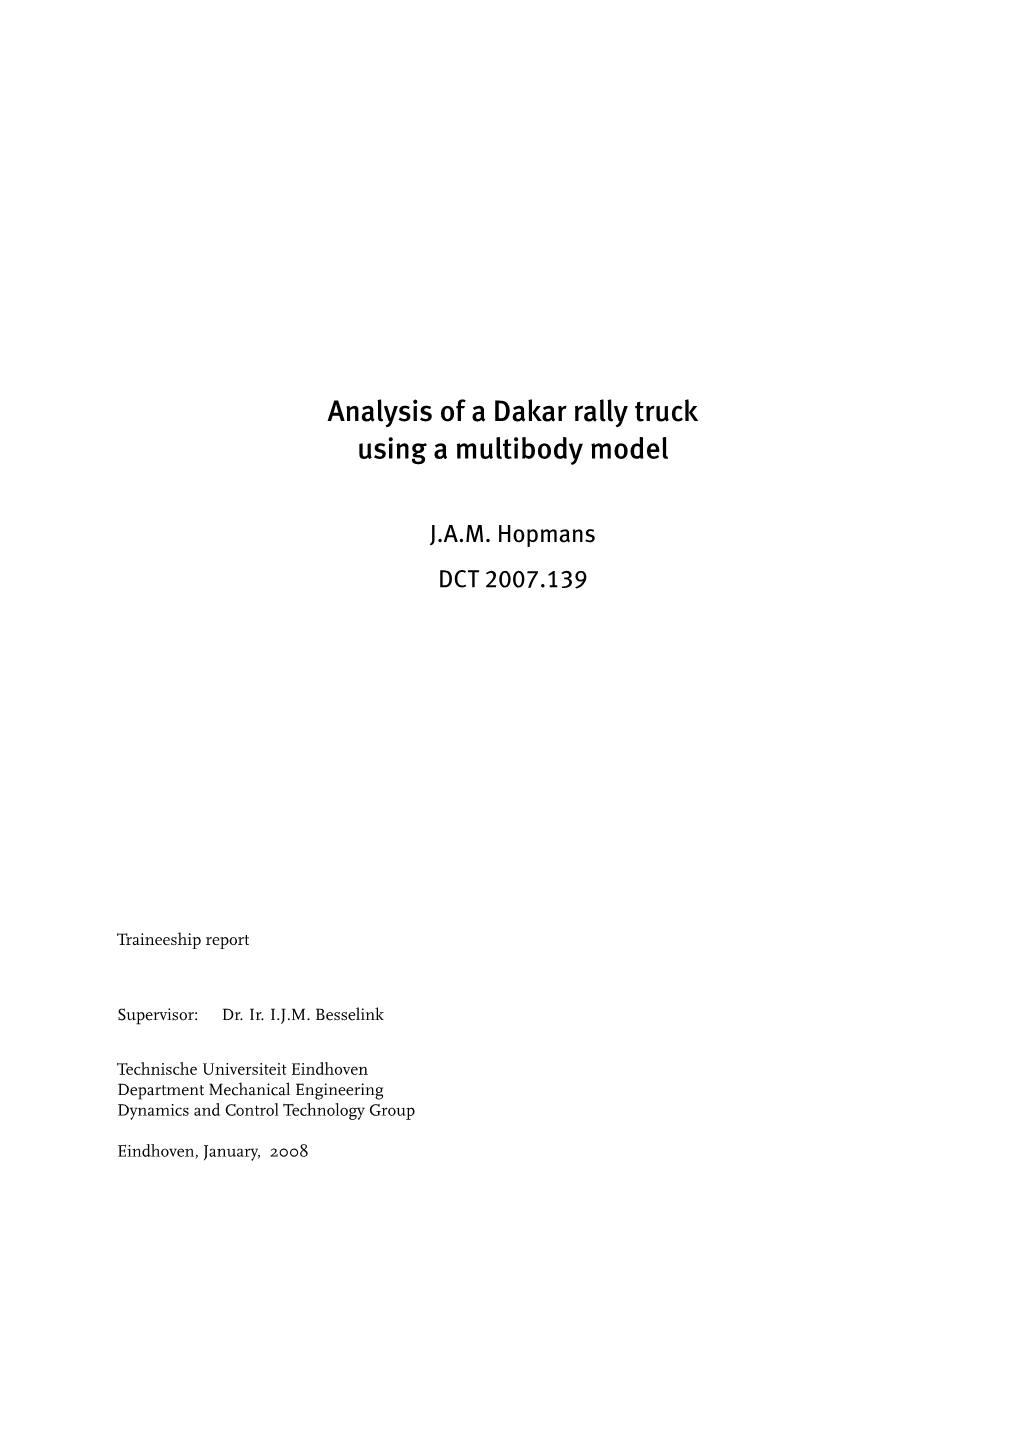 Analysis of a Dakar Rally Truck Using a Multibody Model